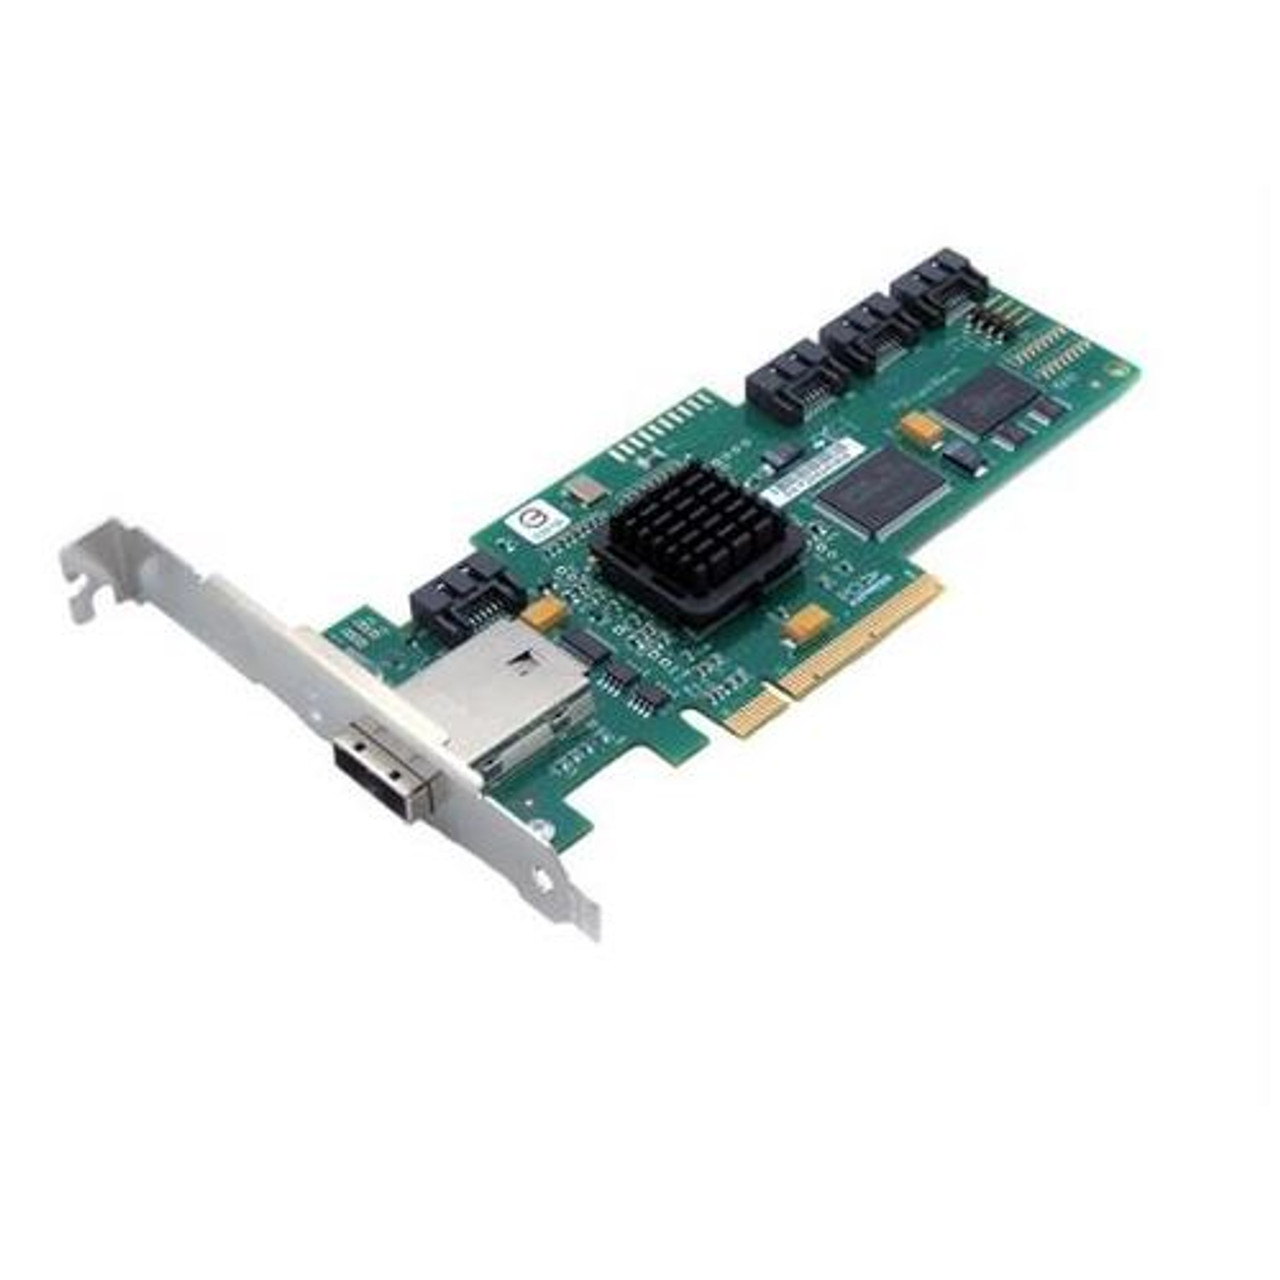 AVA2906 - Adaptec PCI SCSI Card